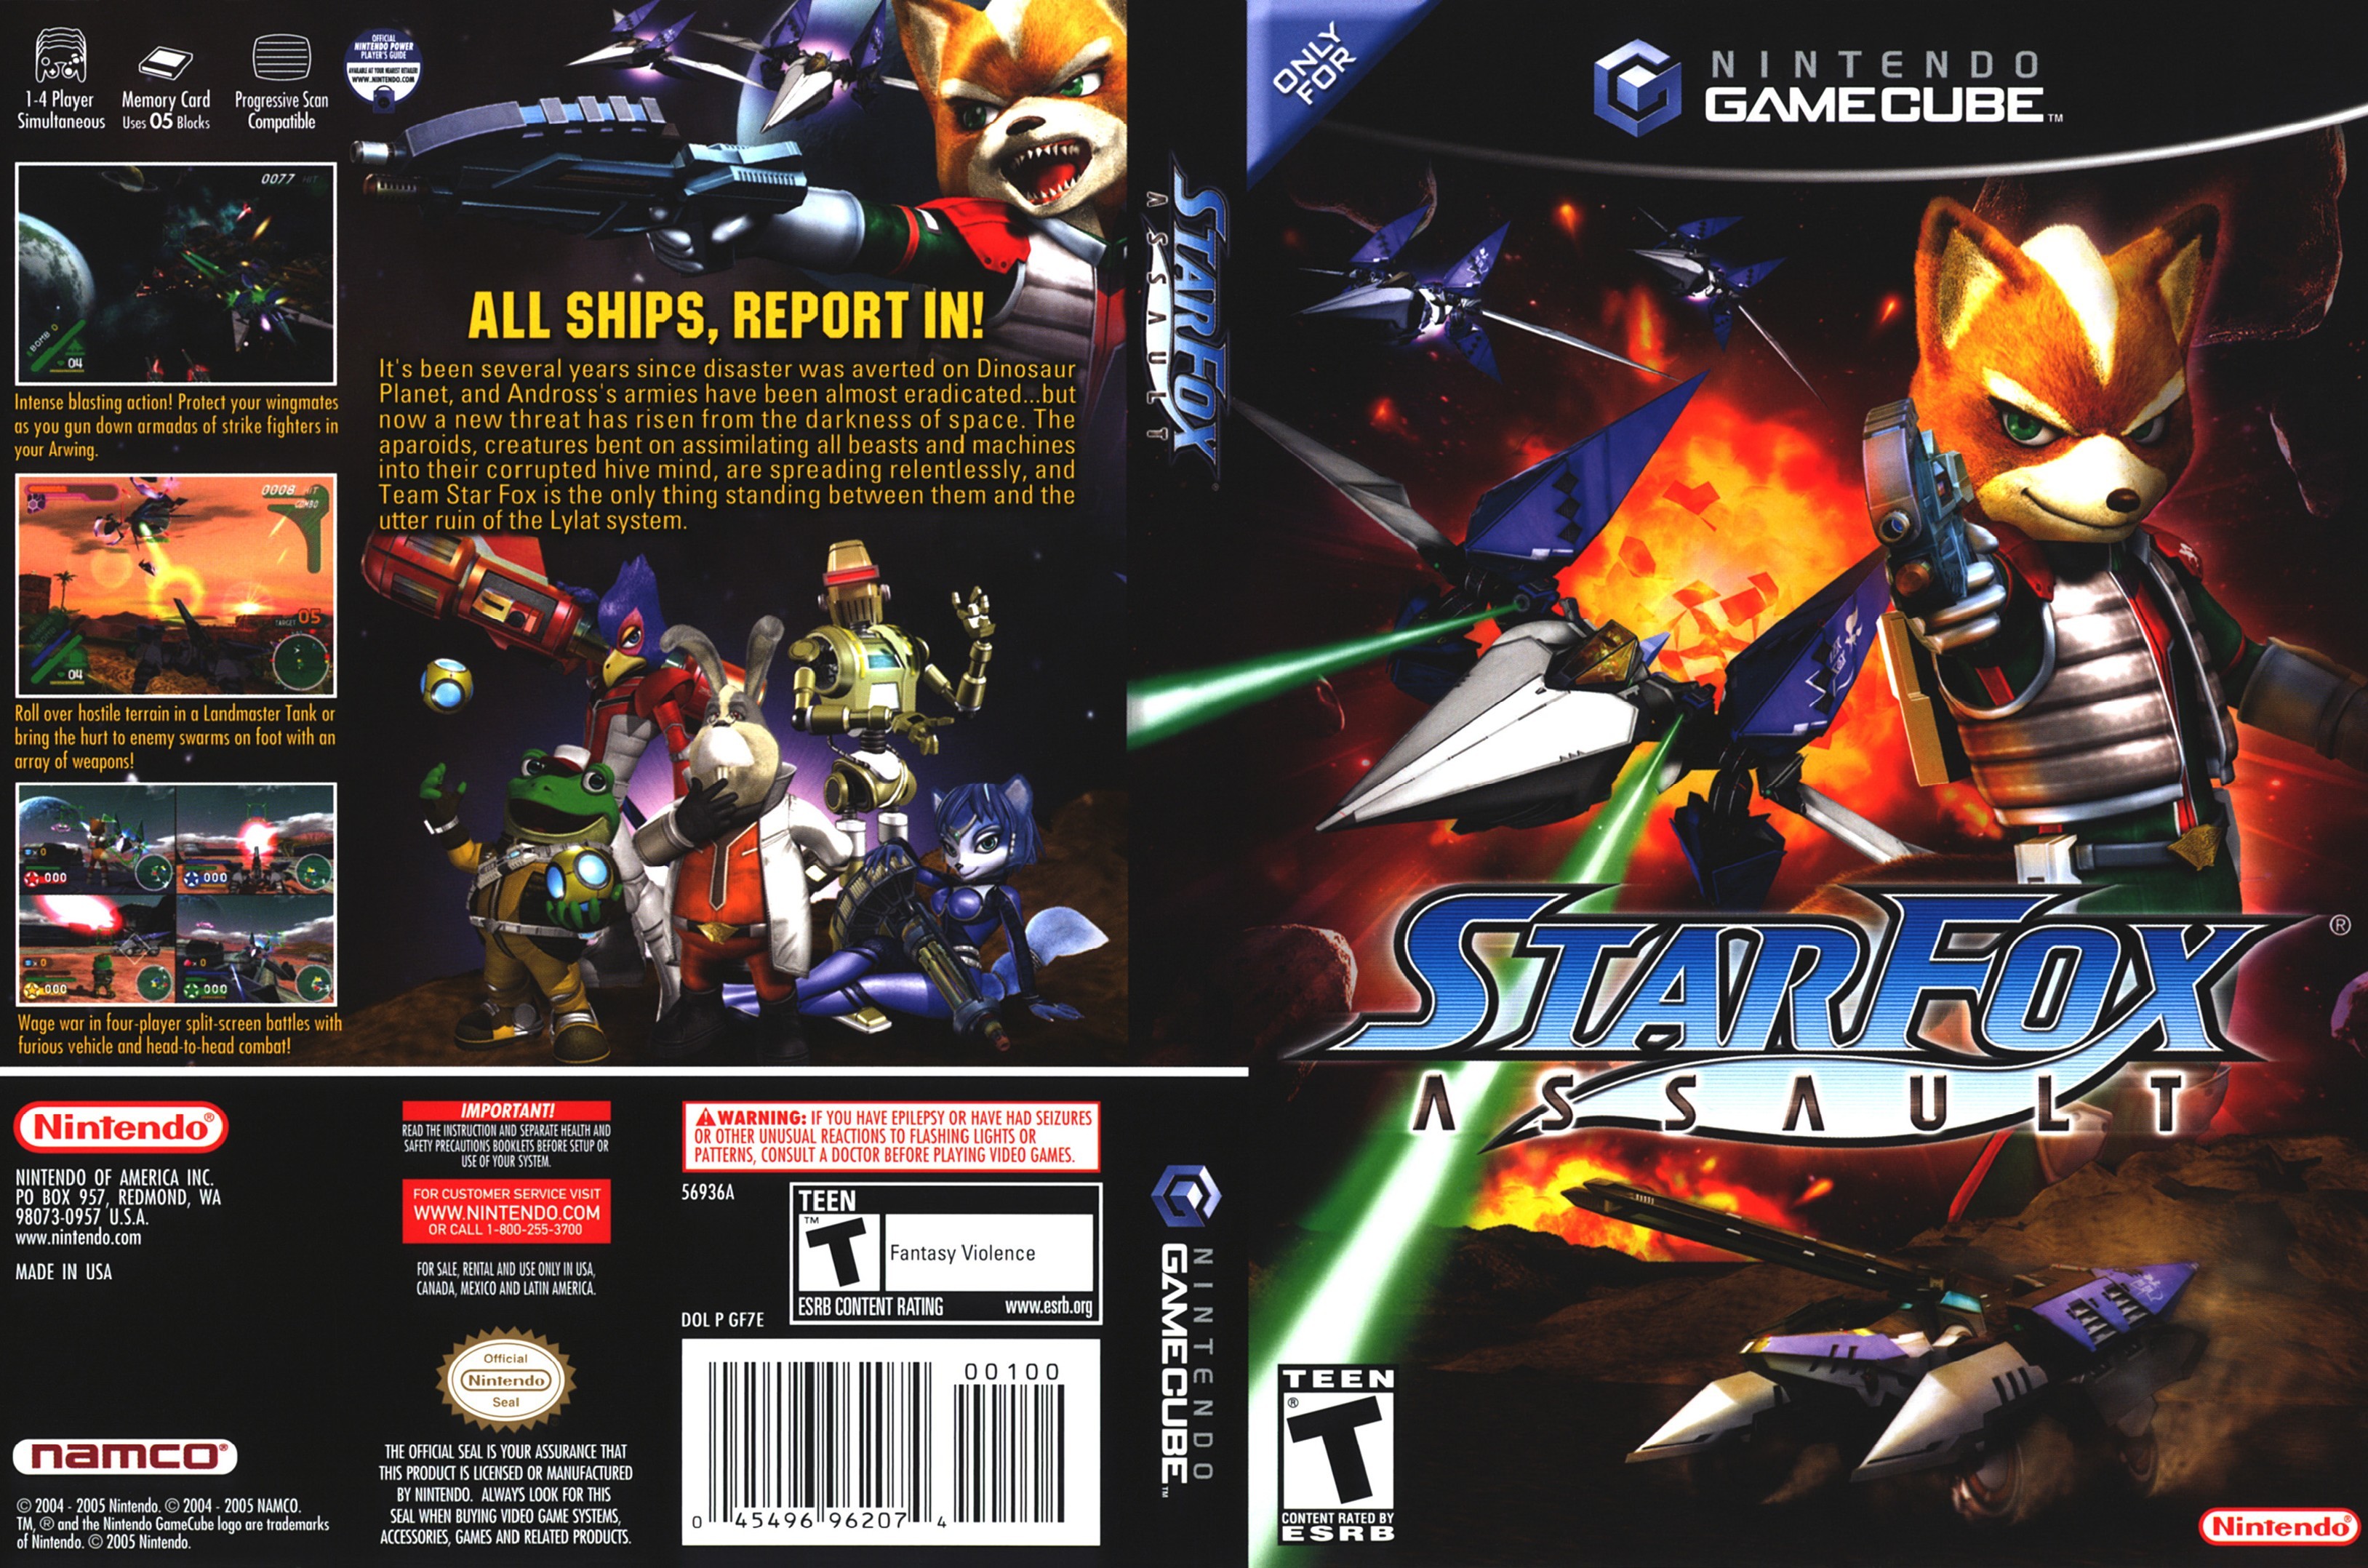 Star Fox ROMs - Star Fox Download - Emulator Games